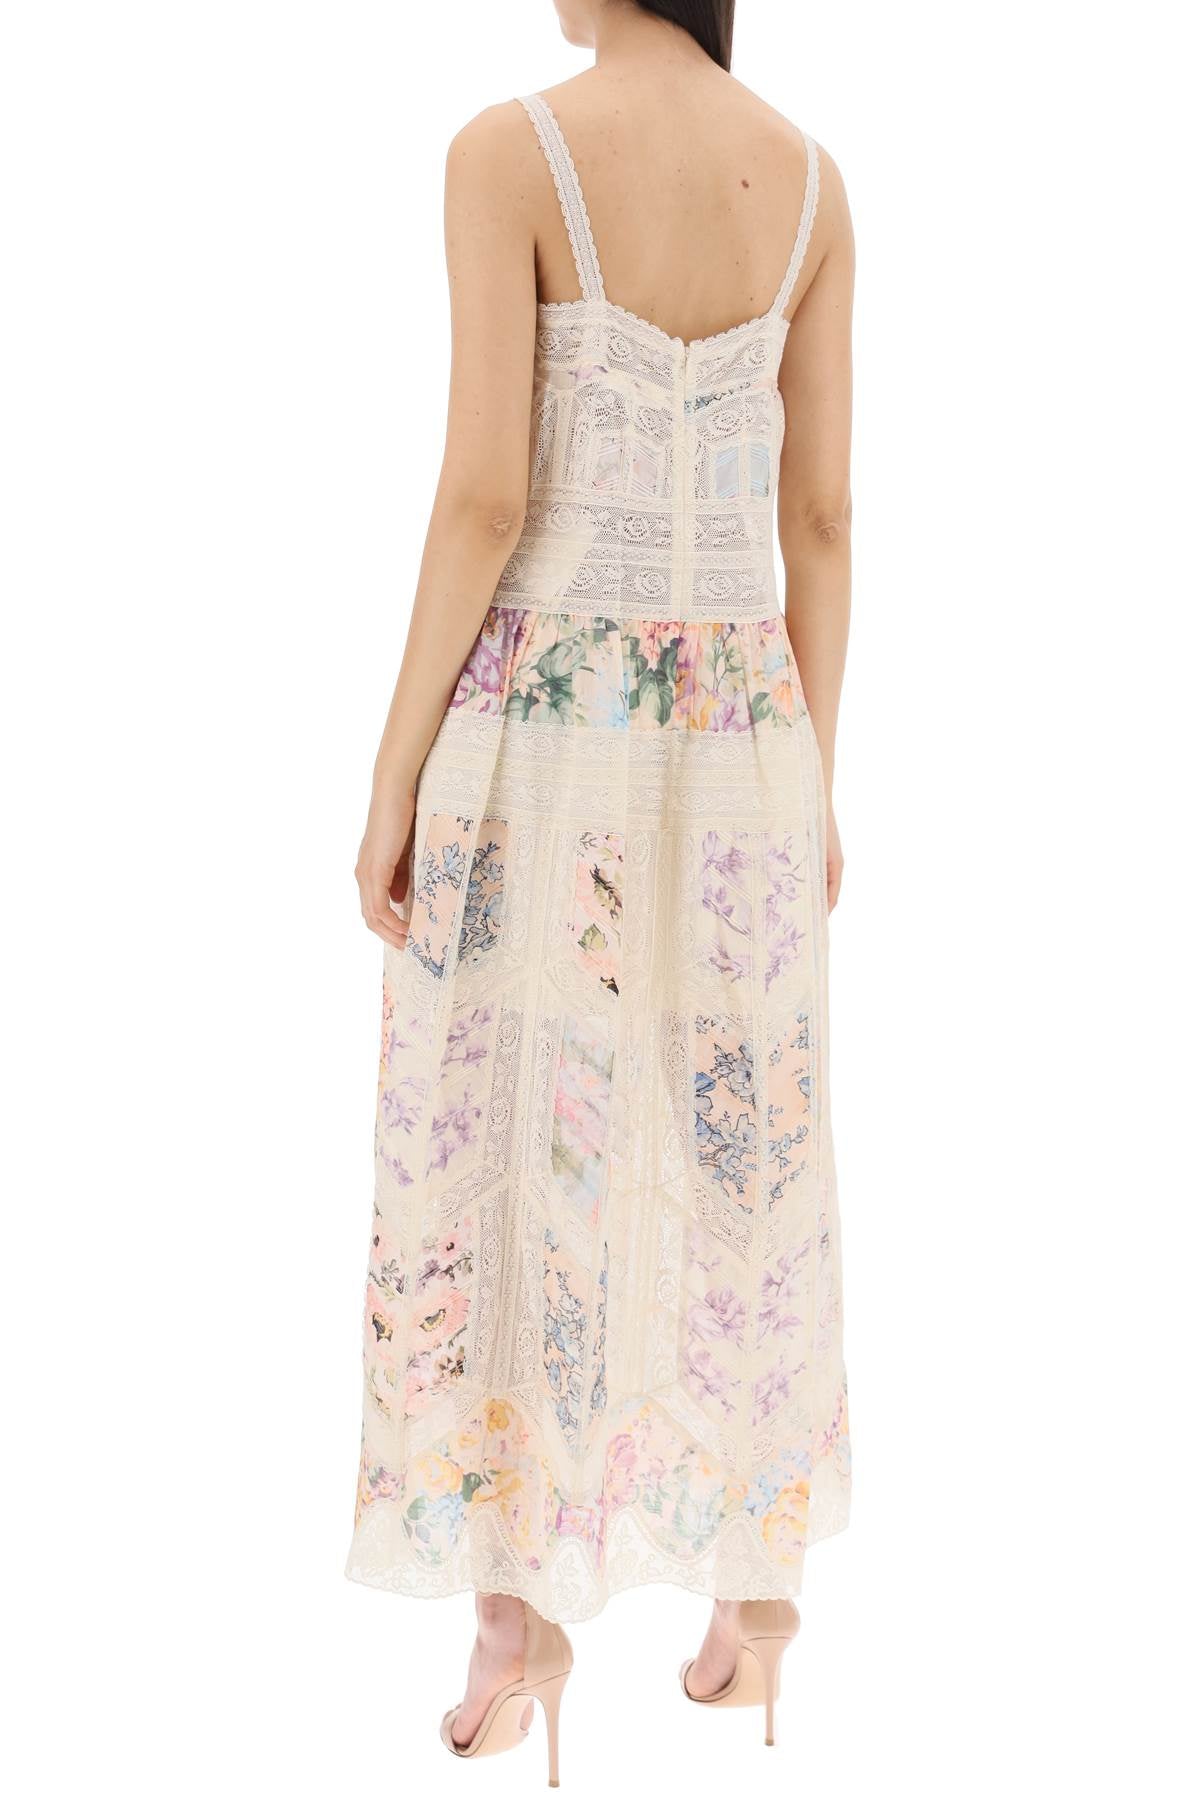 ZIMMERMANN Multicolor Floral Dress with Lace Trim